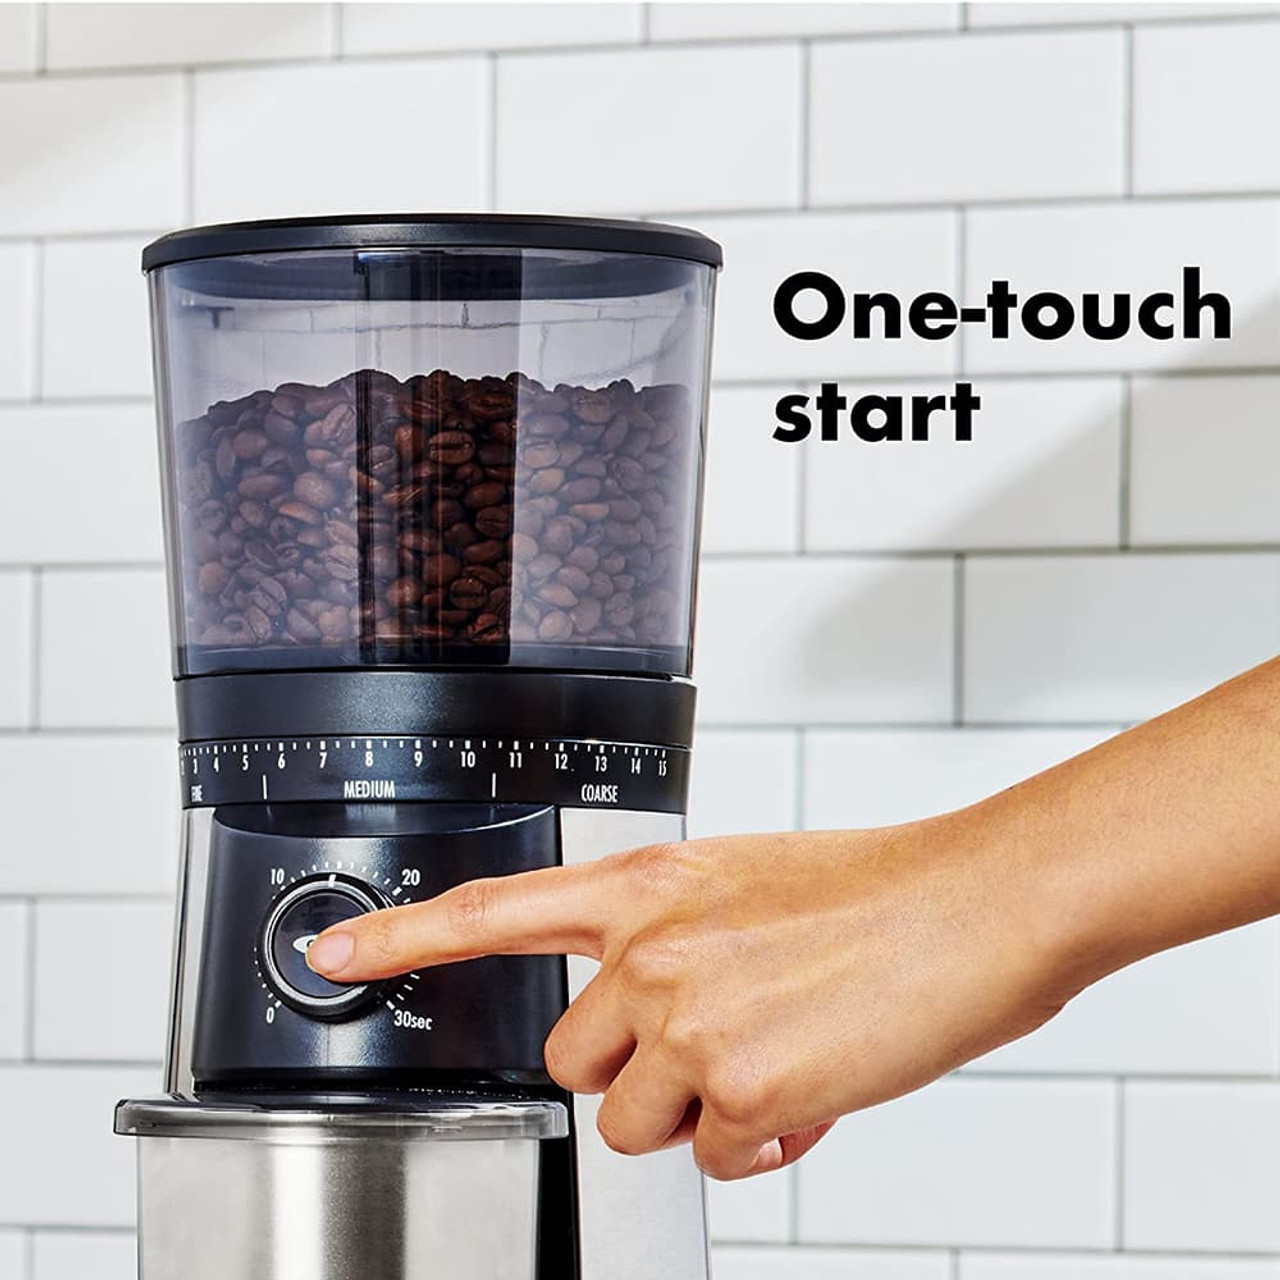 OXO Brew Coffee Grinder